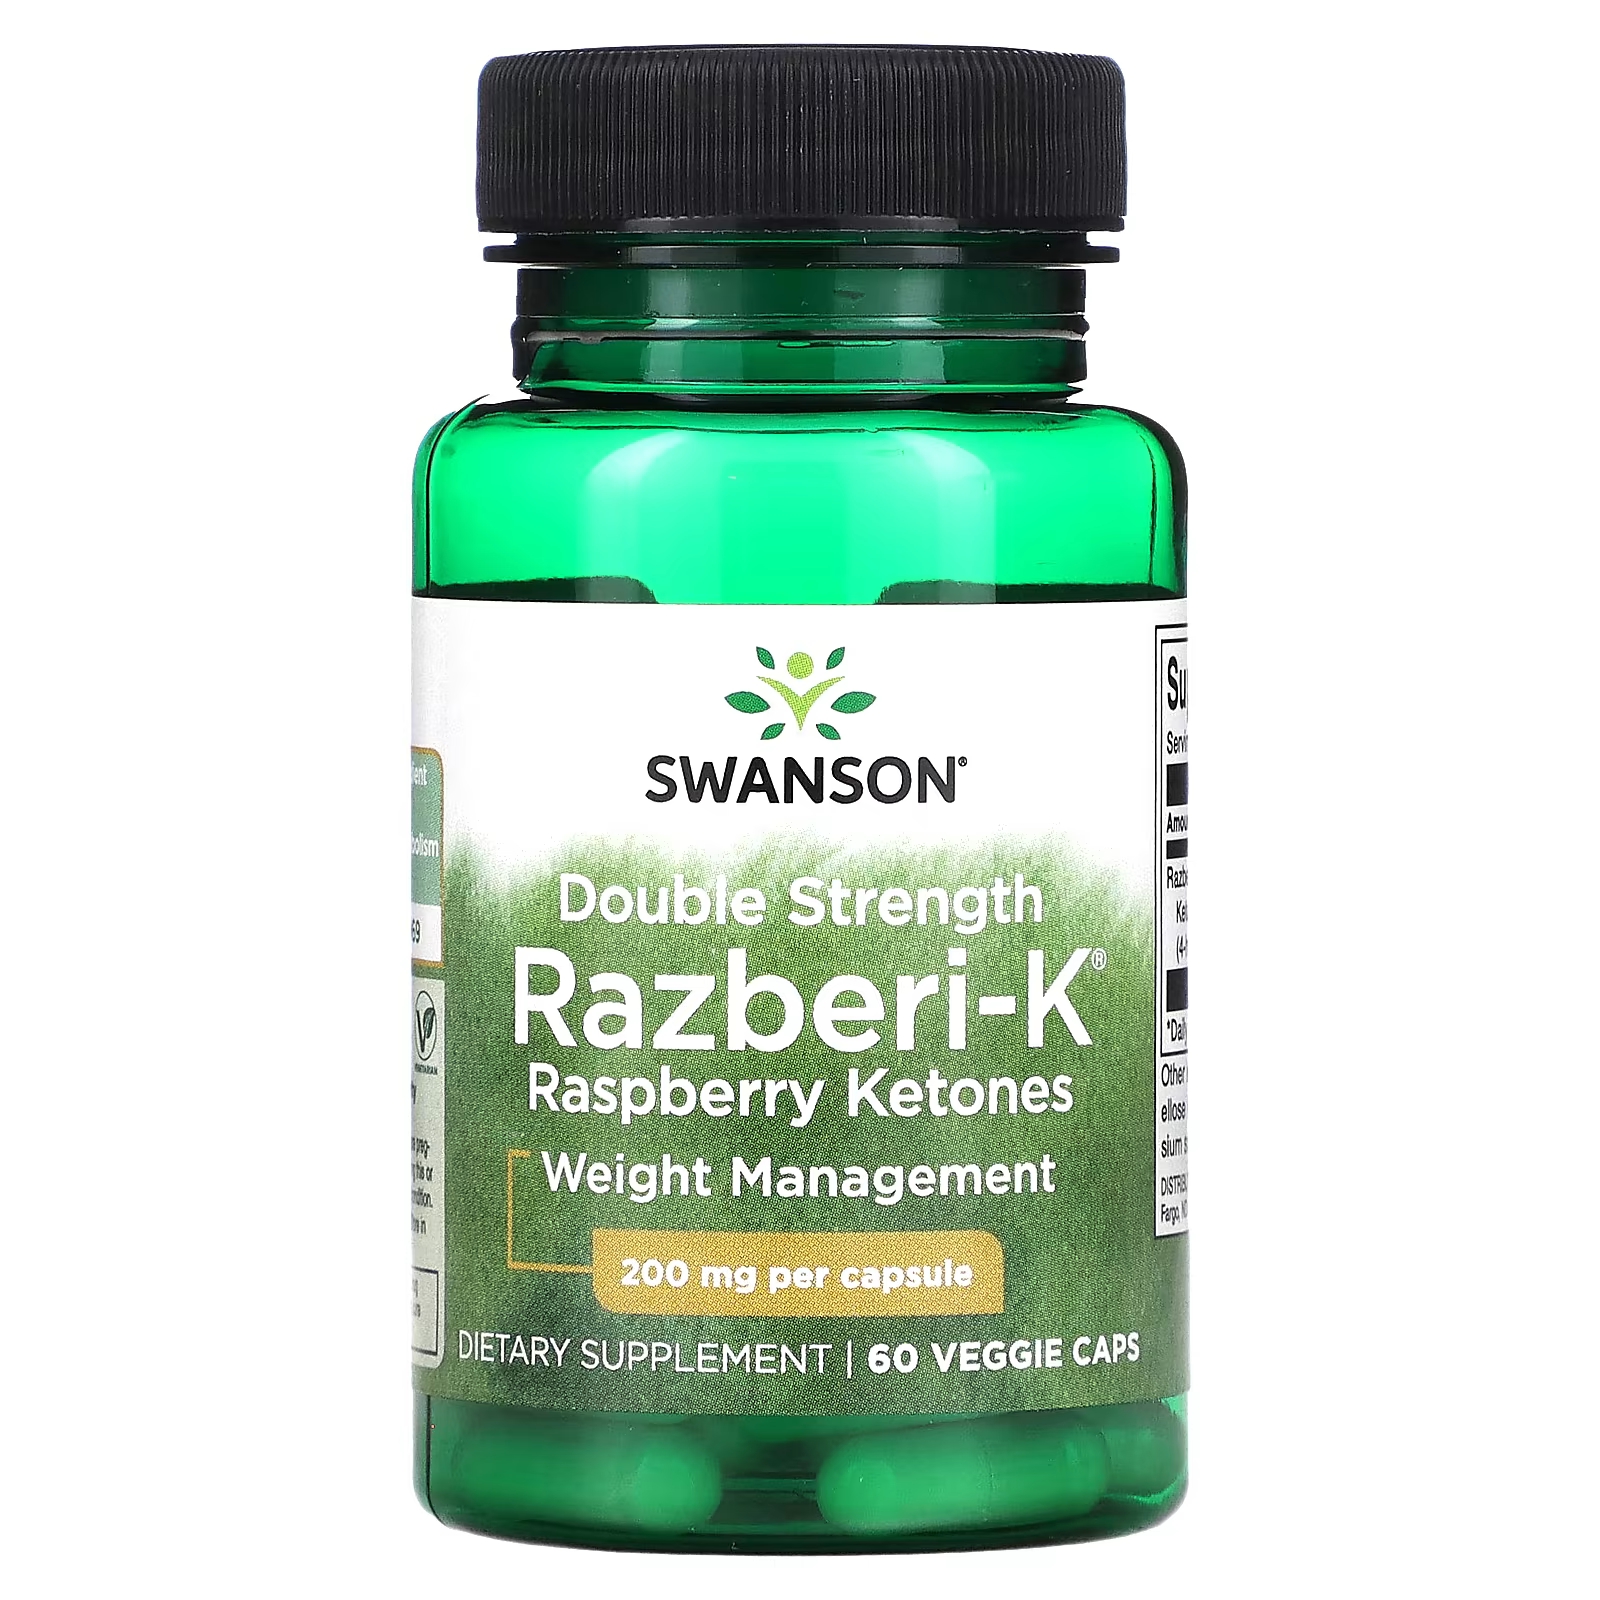 Пищевая добавка Swanson Double Strength Razberi-K малина, 60 растительных капсул swanson razberi k кетоны малины 100 мг 60 капсул